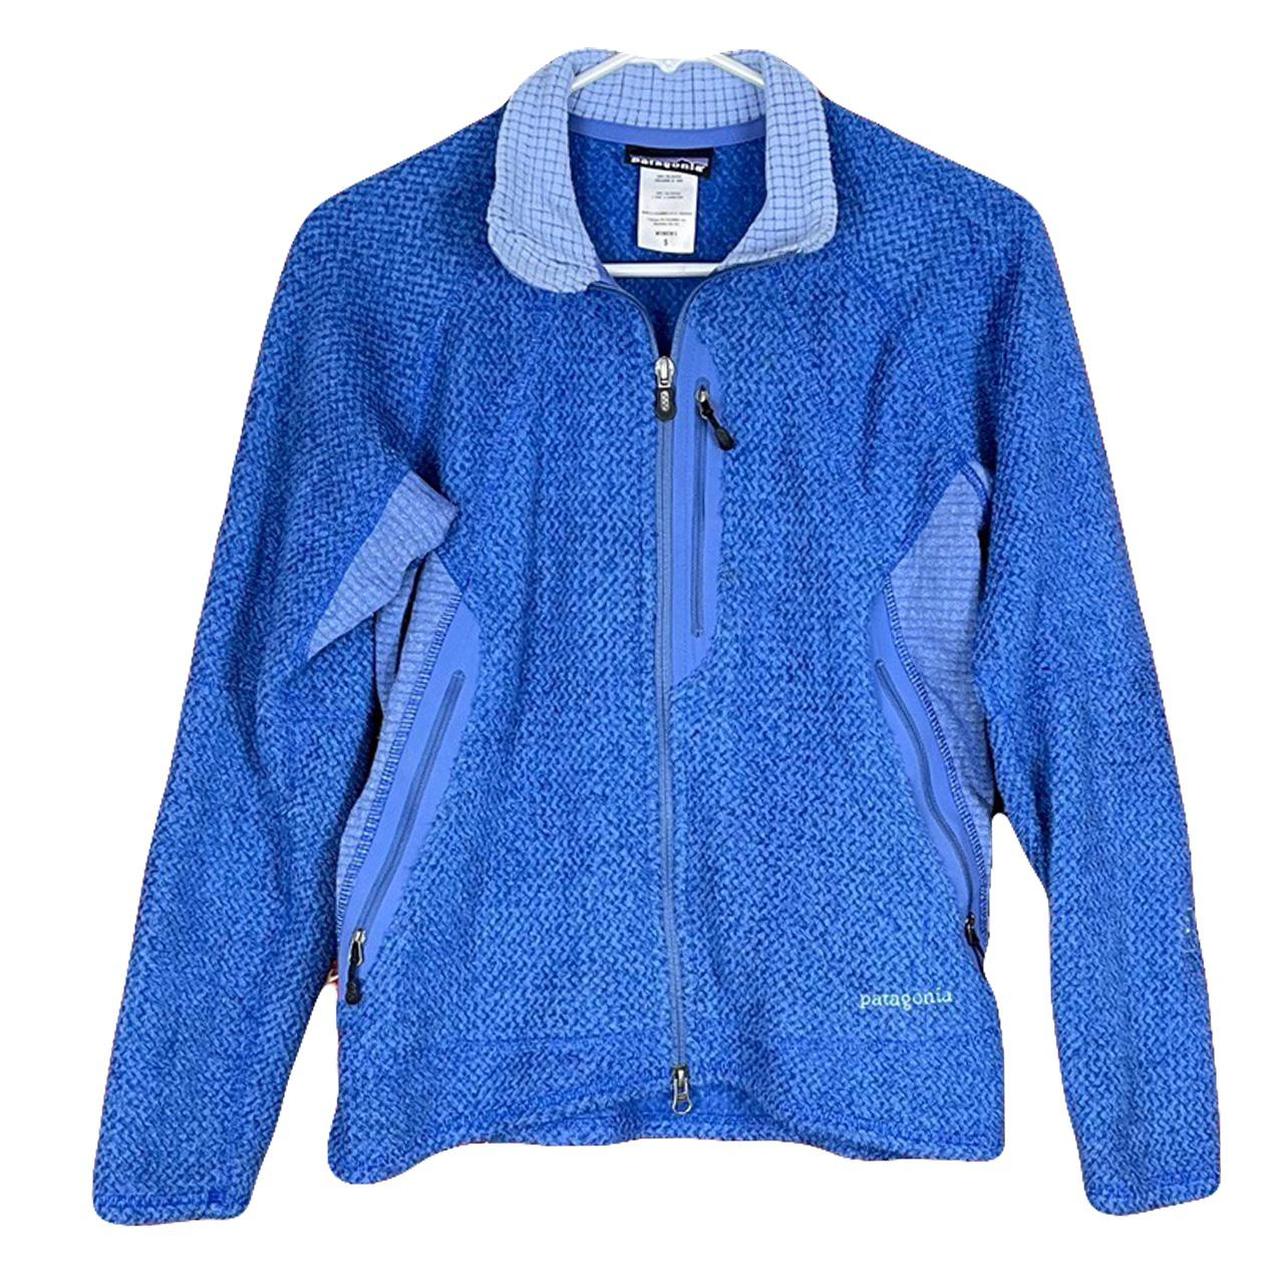 Product Image 1 - Patagonia Blue Fleece Jacket

🌊Free shipping